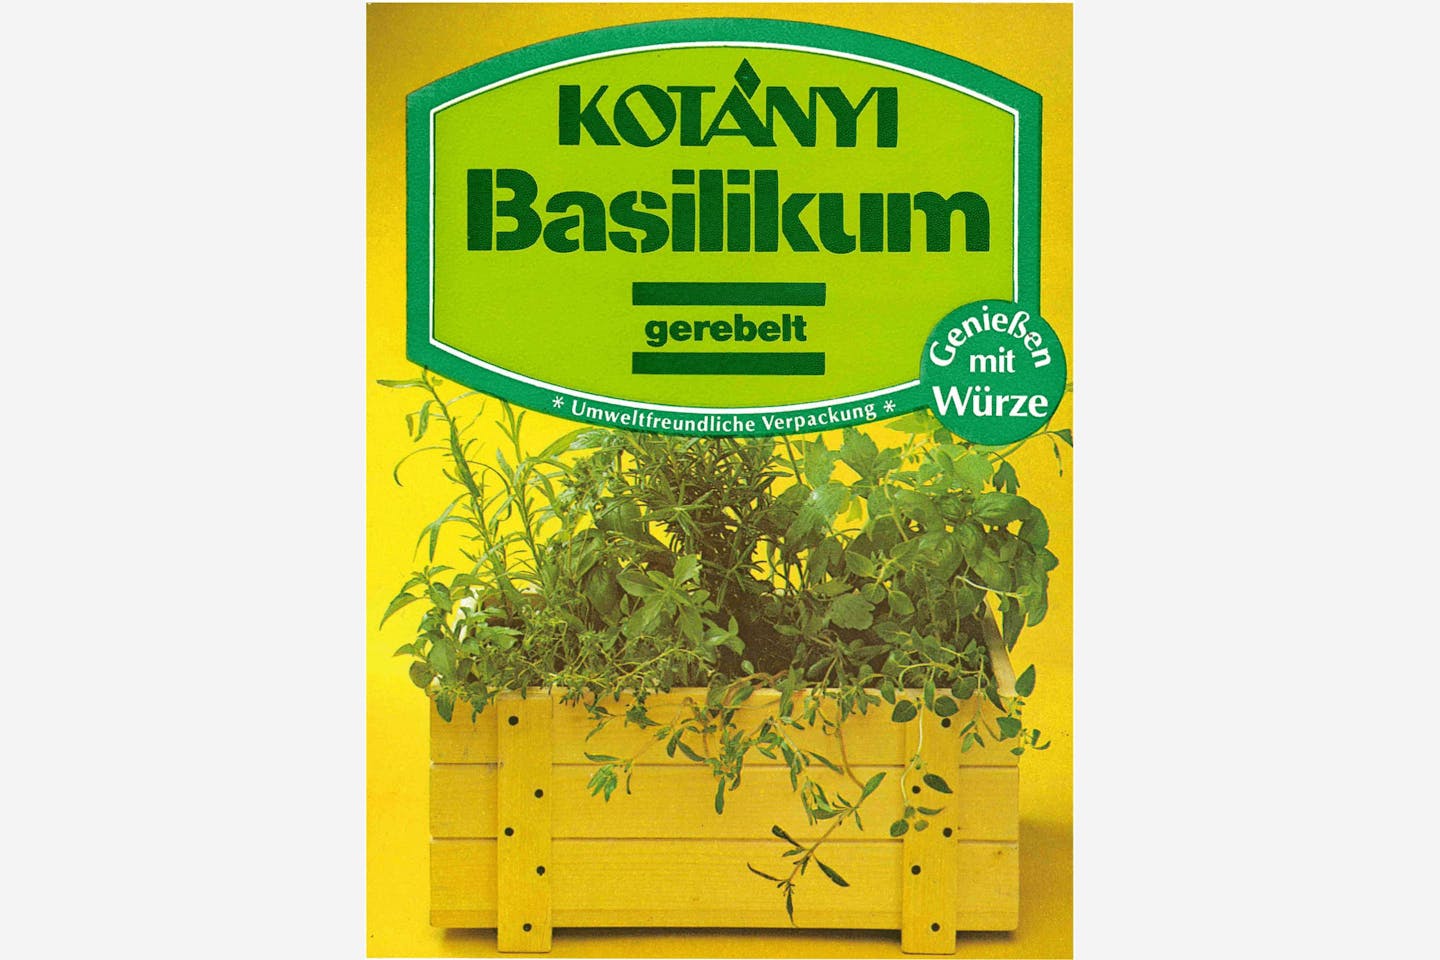 Plic biodegradabil de busuioc Kotányi din anii ’80.